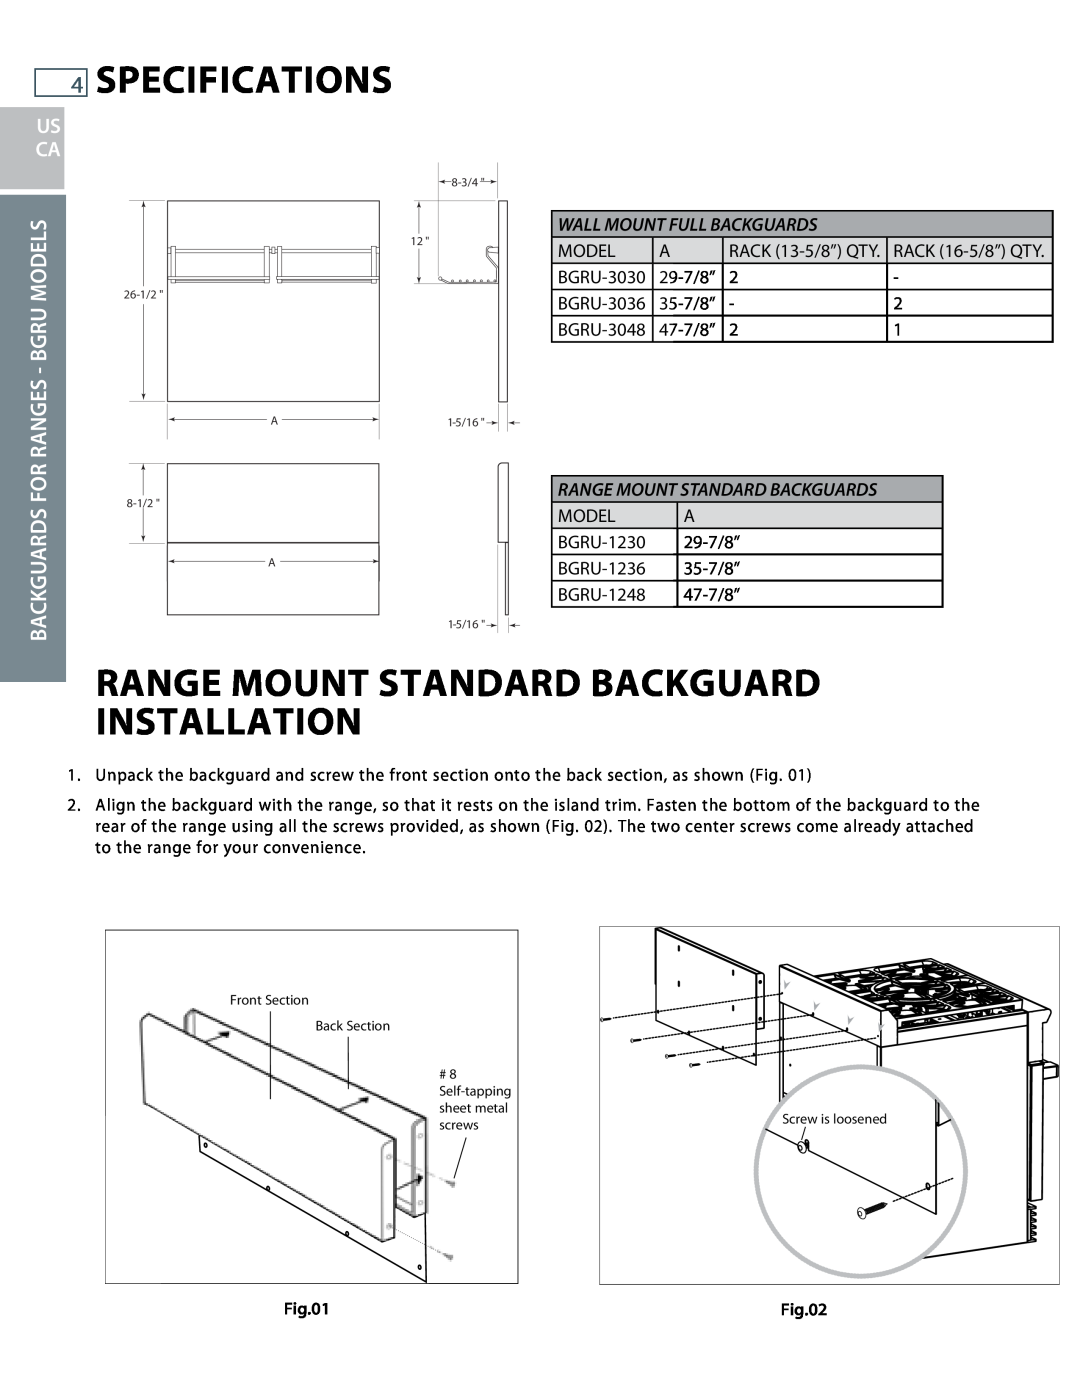 DCS BGCU, BGRU Specifications, Range Mount Standard Backguard Installation, Bgru Models, Wall Mount Full Backguards, Us Ca 